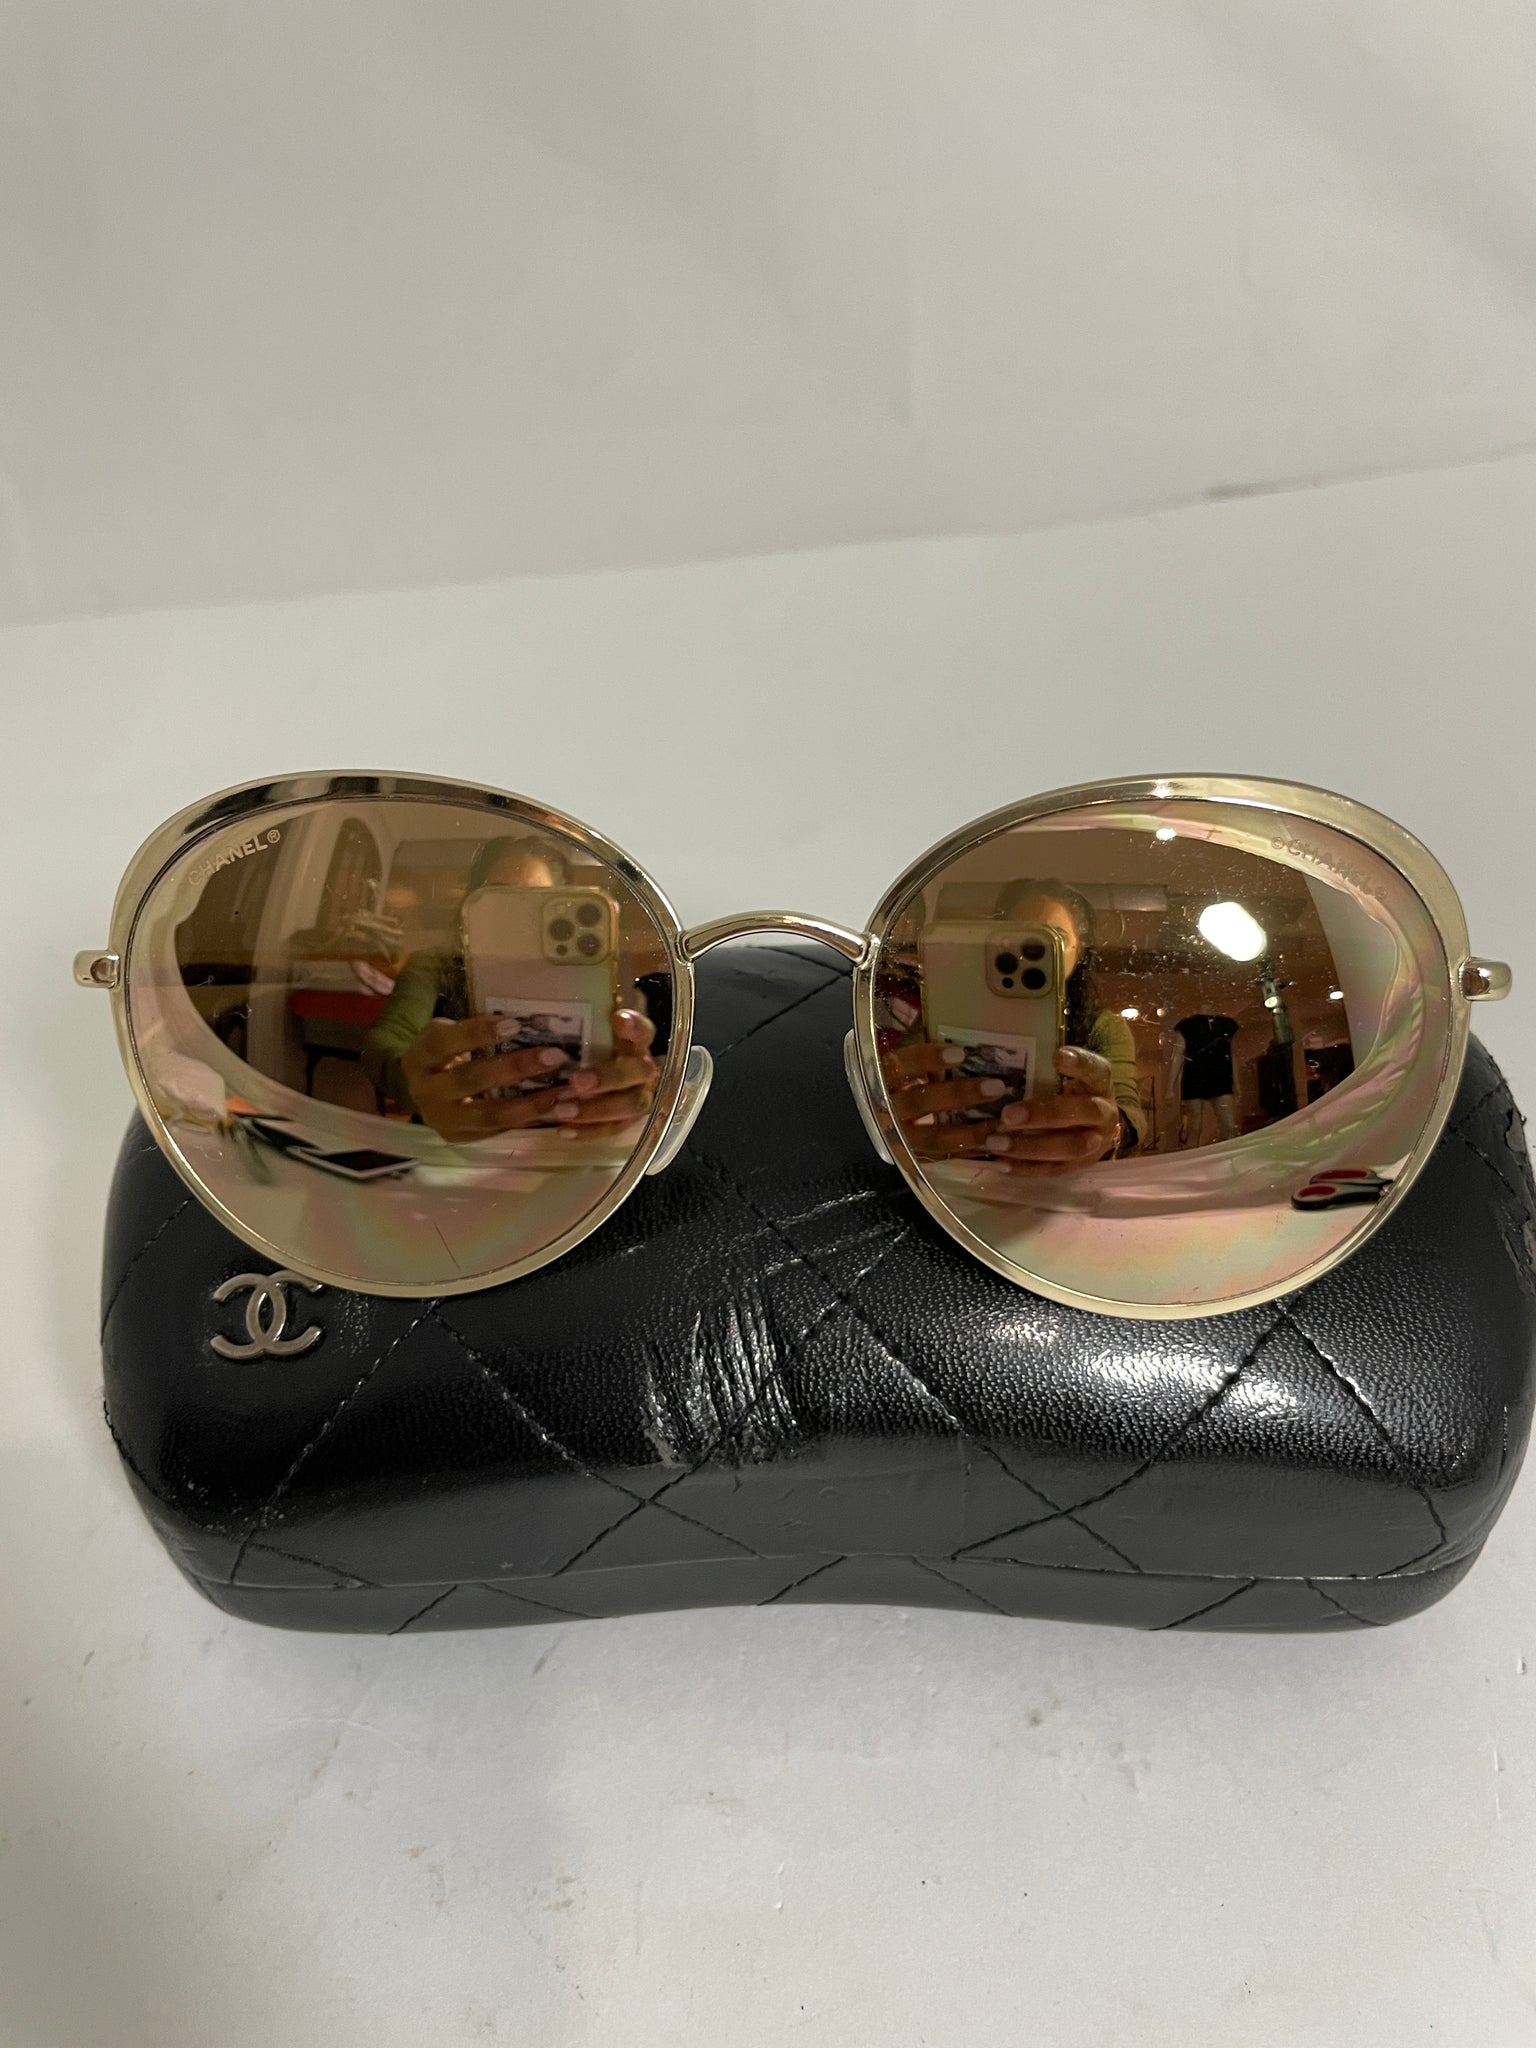 CHANEL Aviator sunglasses